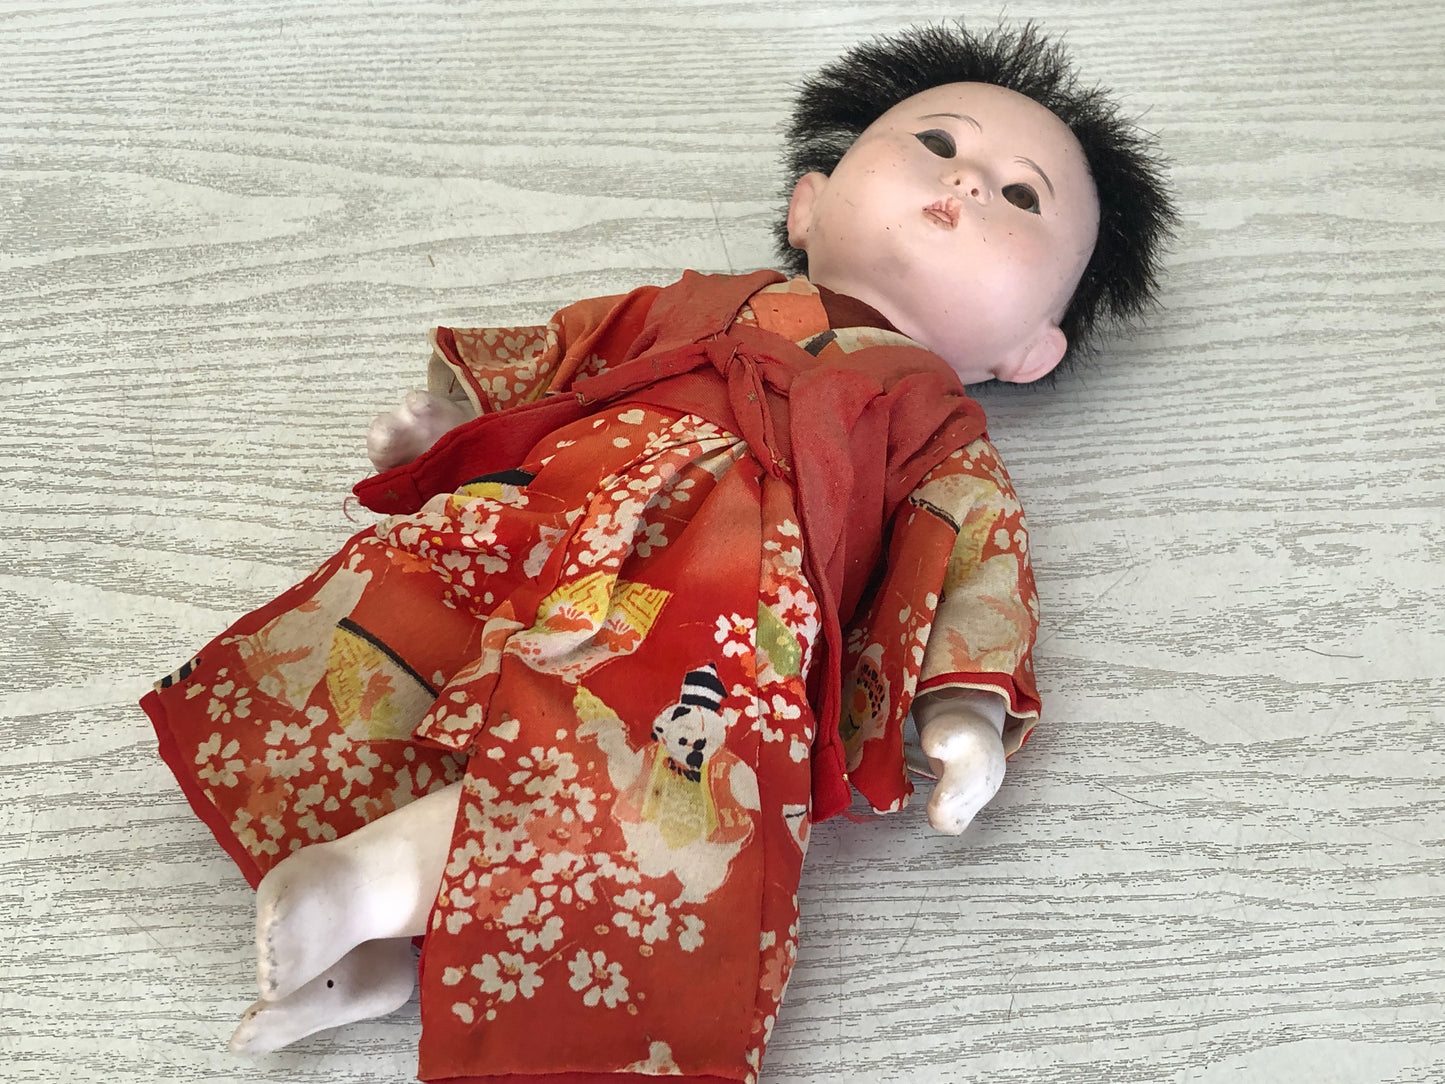 Y3576 NINGYO Boy Doll figure figurine kimono Japanese vintage antique Japan